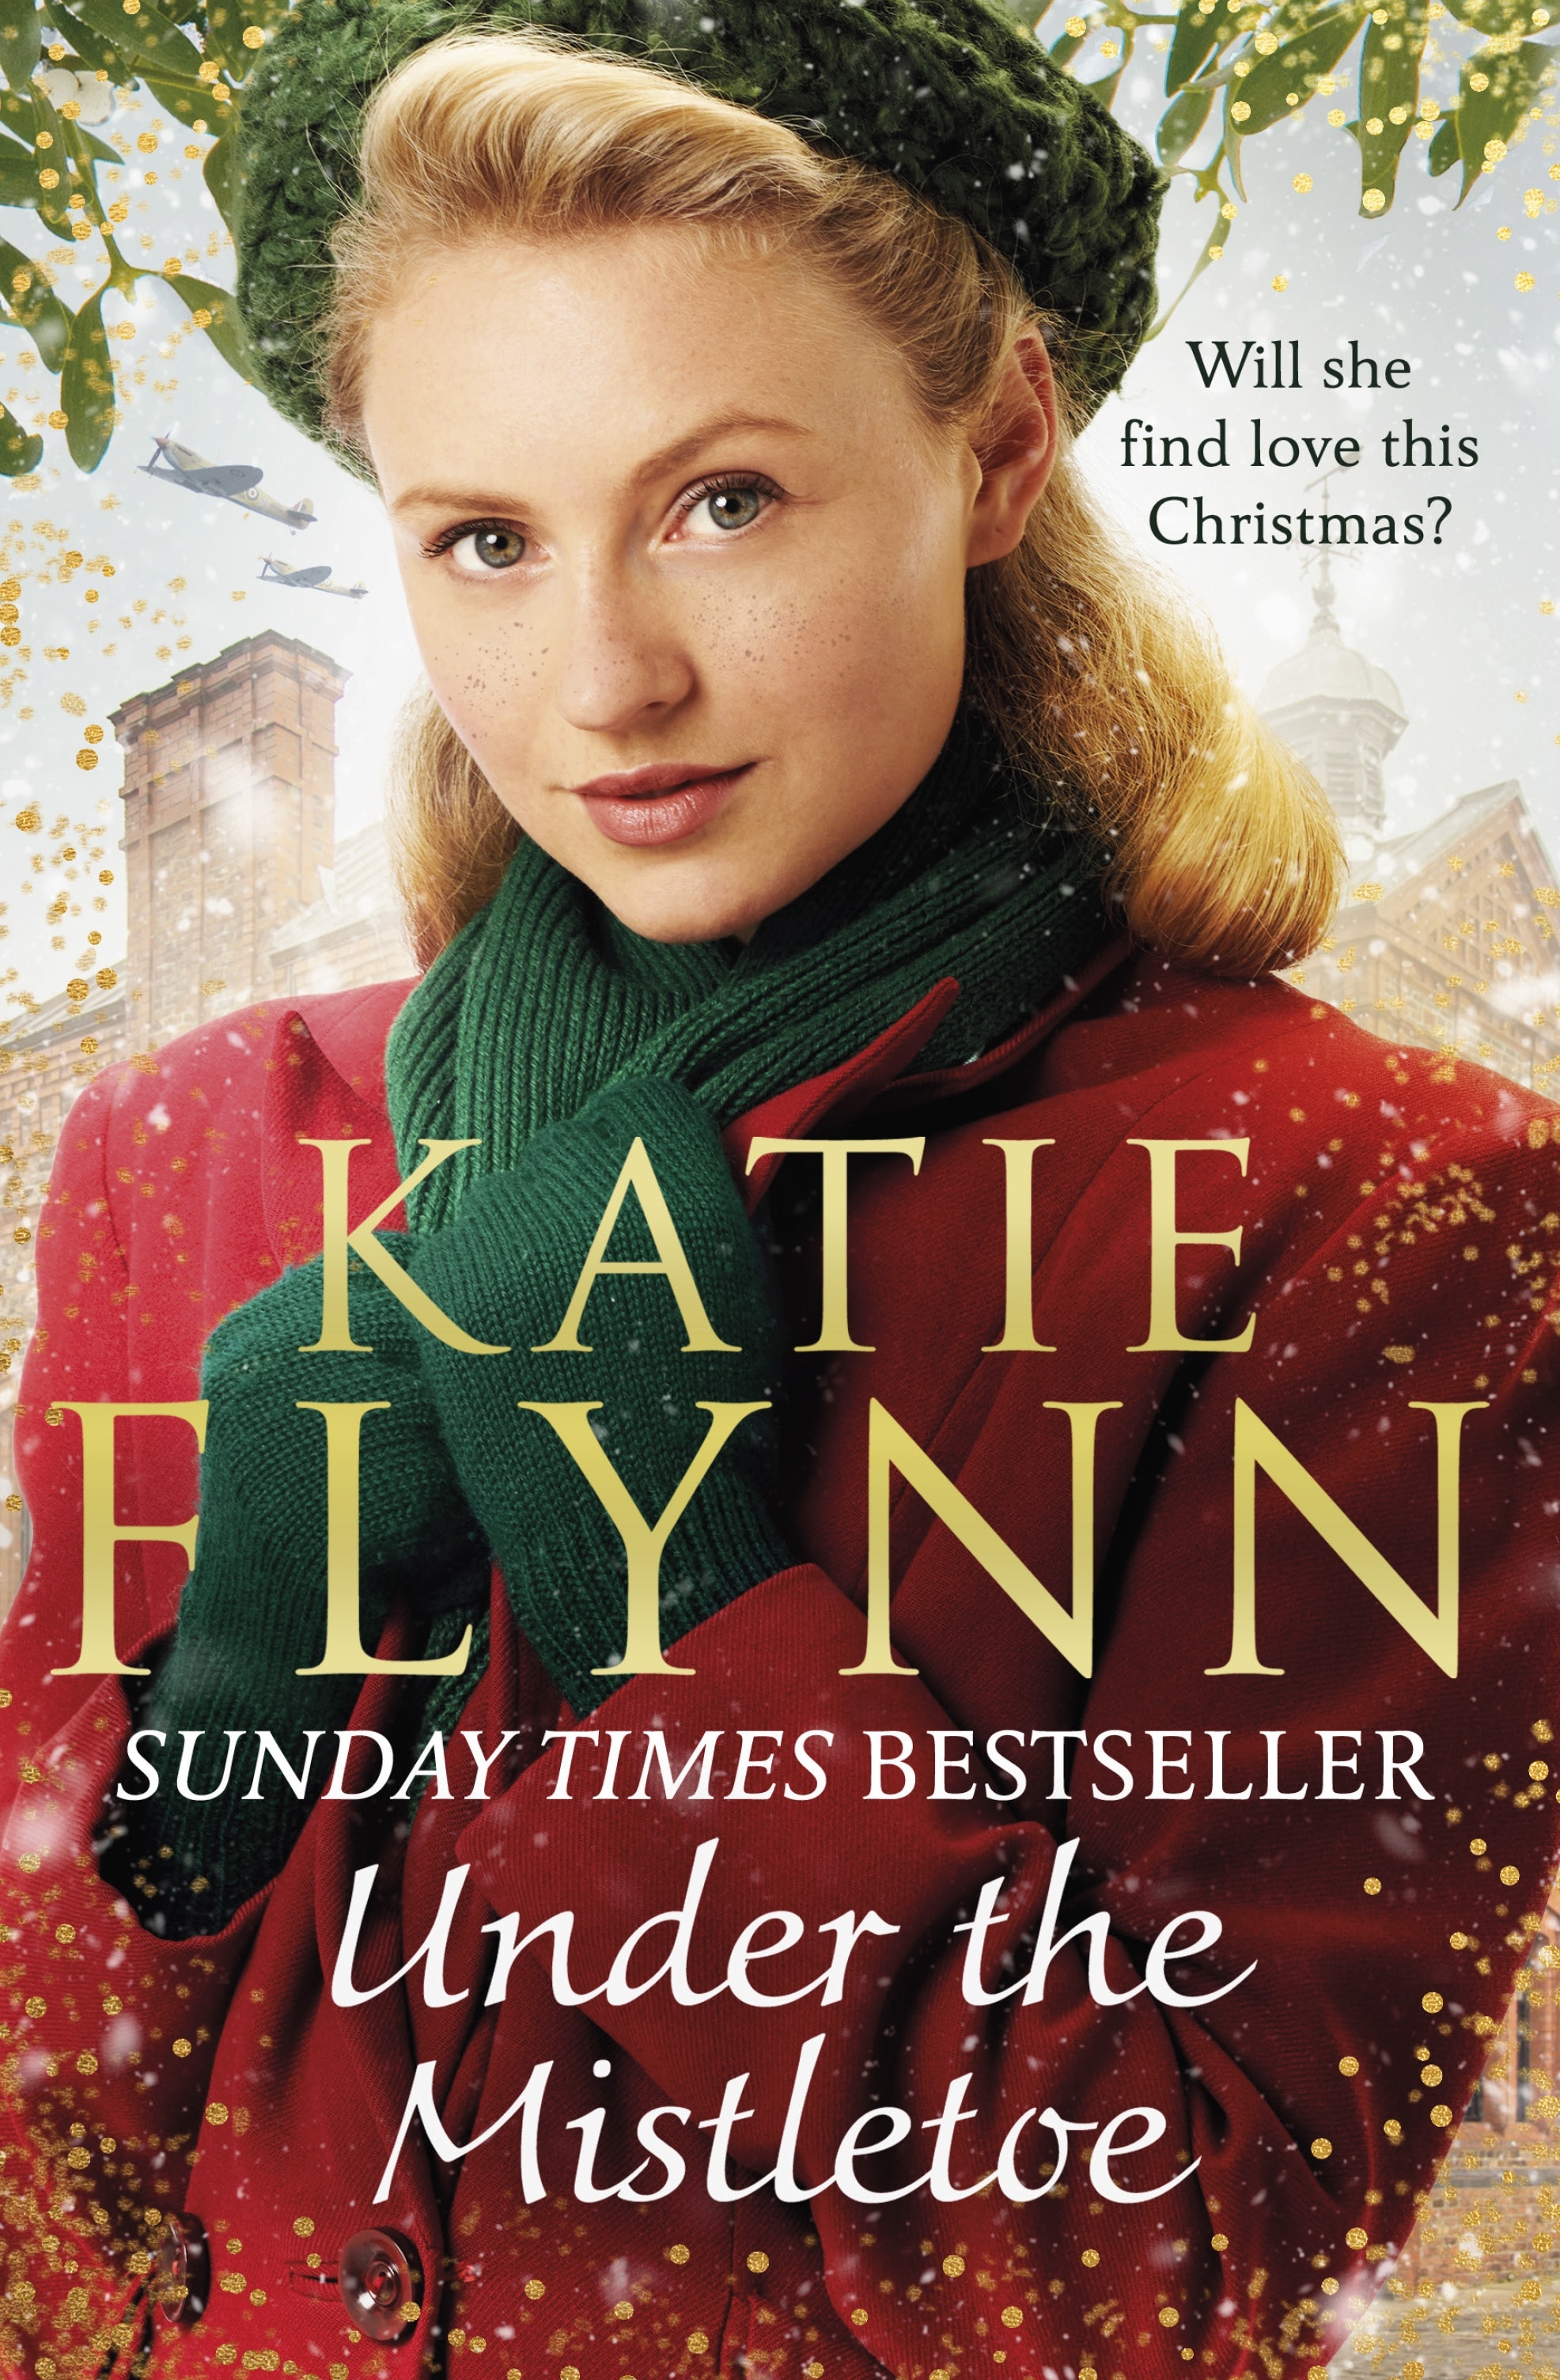 Book “Under the Mistletoe” by Katie Flynn — October 15, 2020